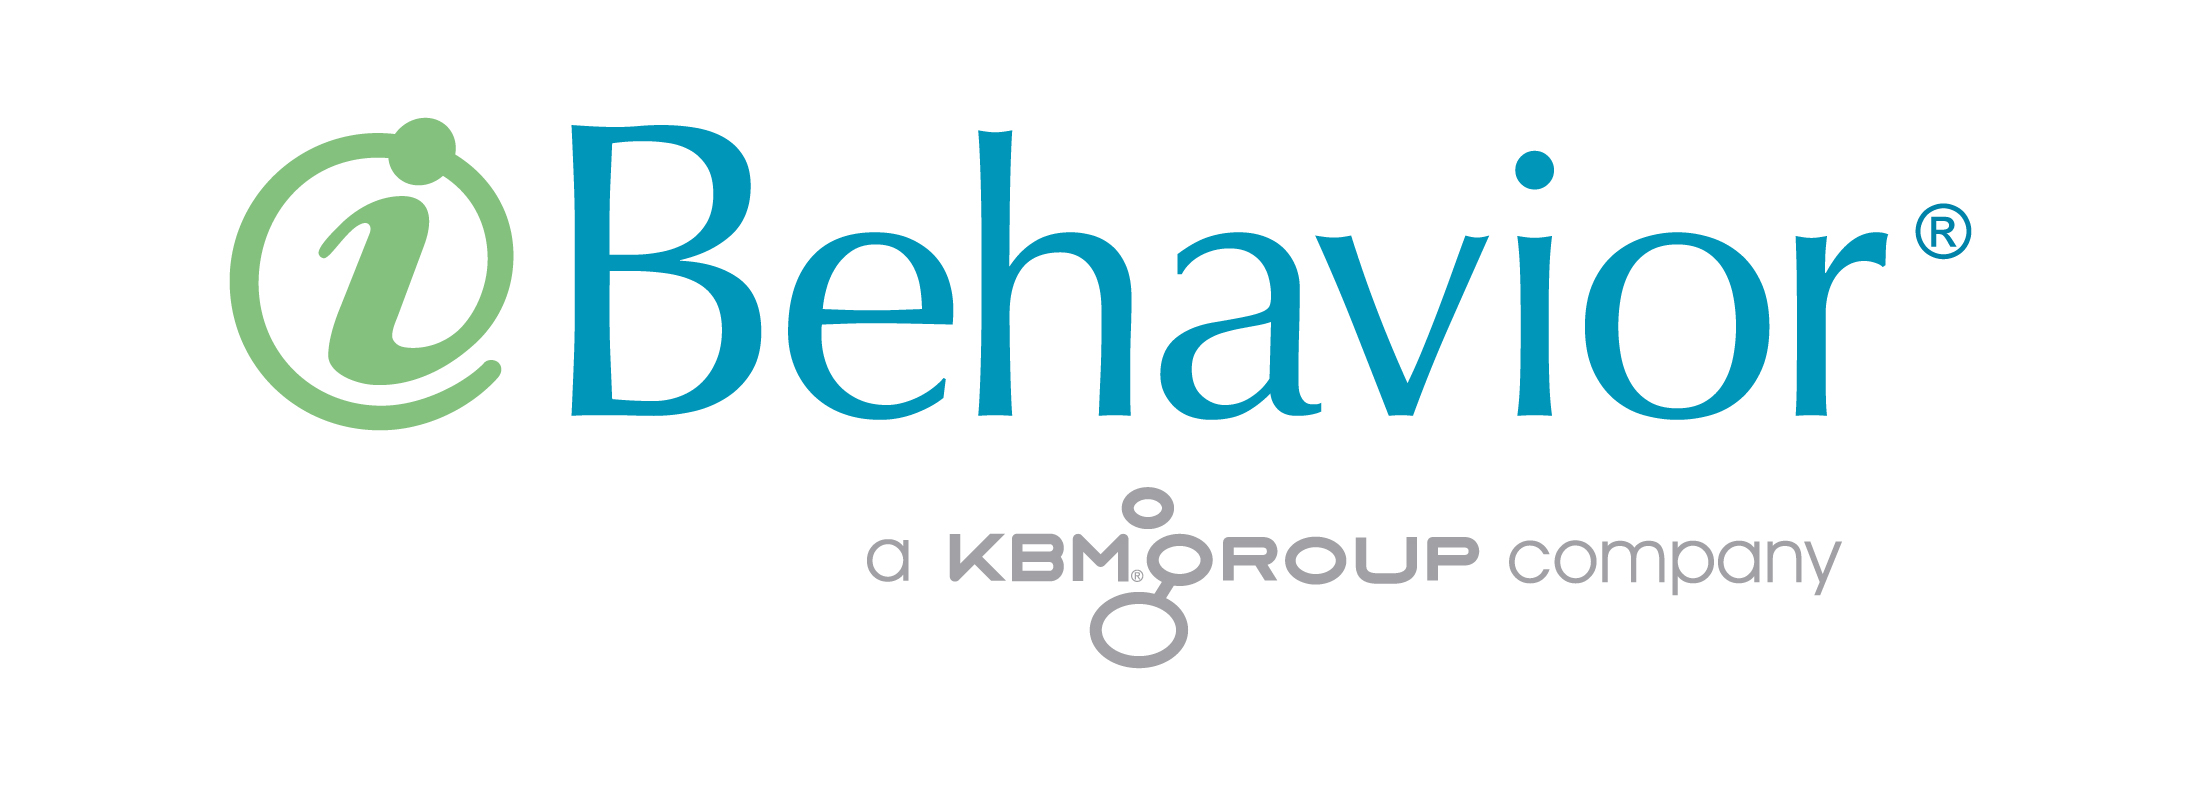 I-Behavior logo